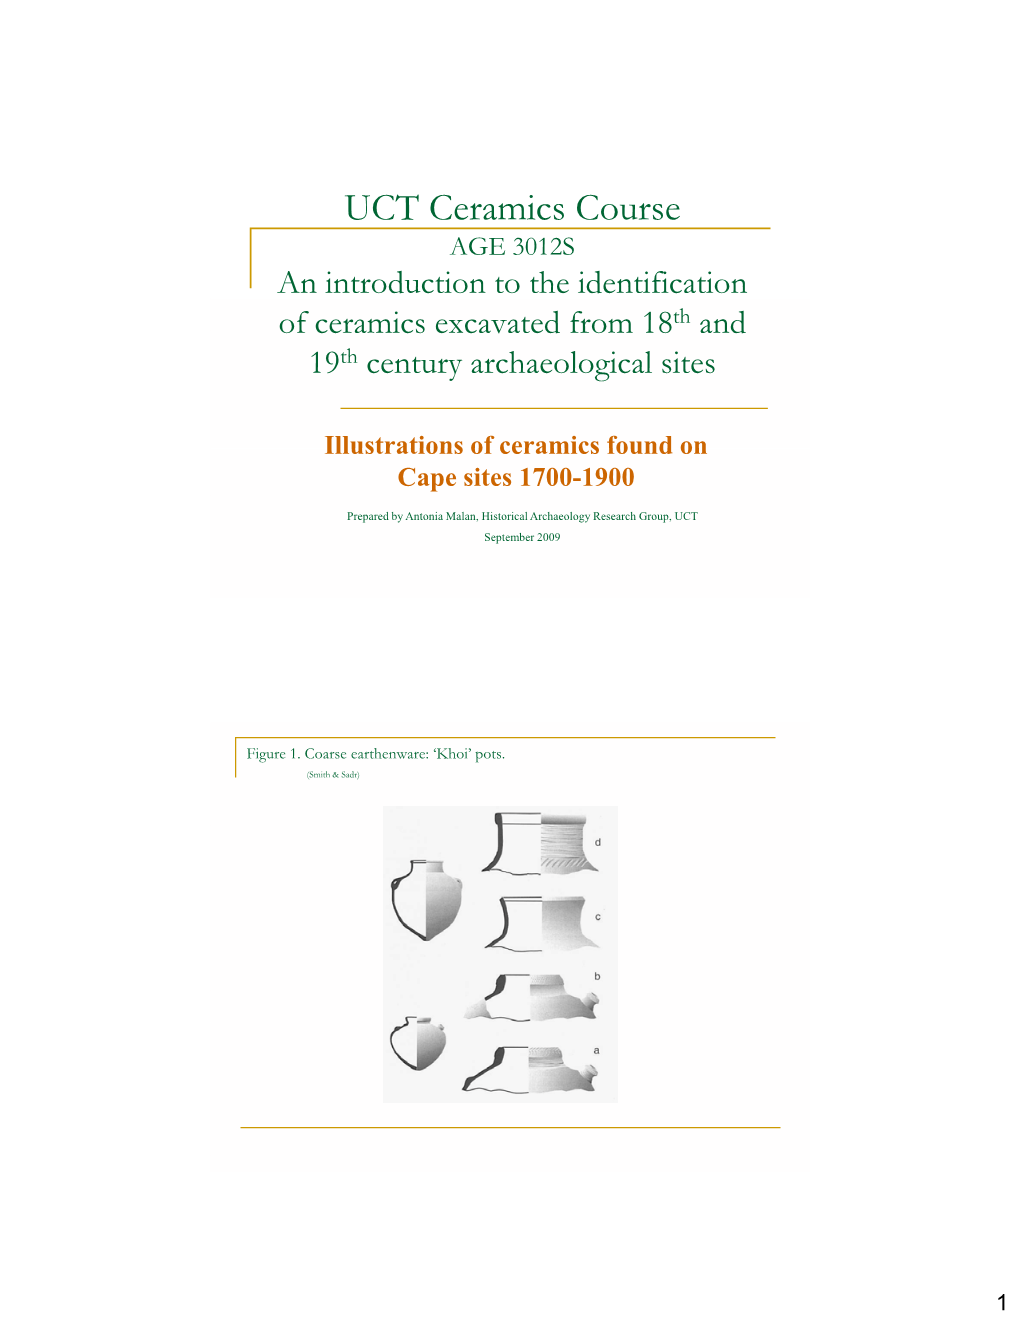 UCT Ceramics Handbook Illustrations 2009